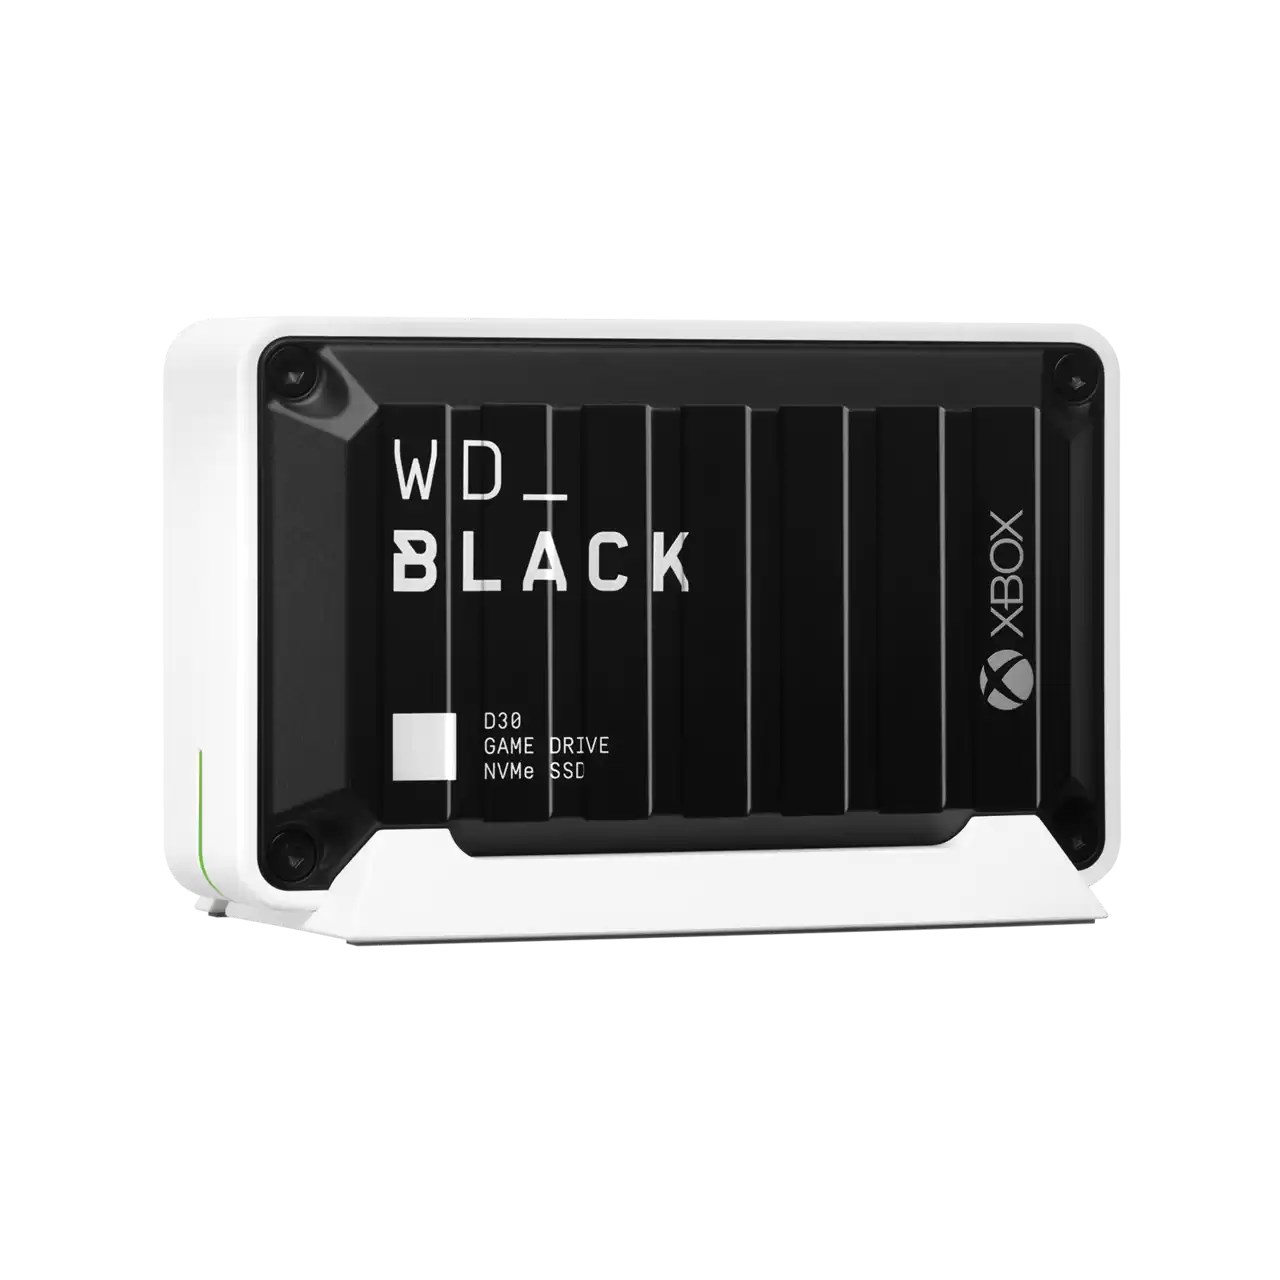 SanDisk externí SSD 500GB WD BLACK D30 Game Drive pro Xbox1 